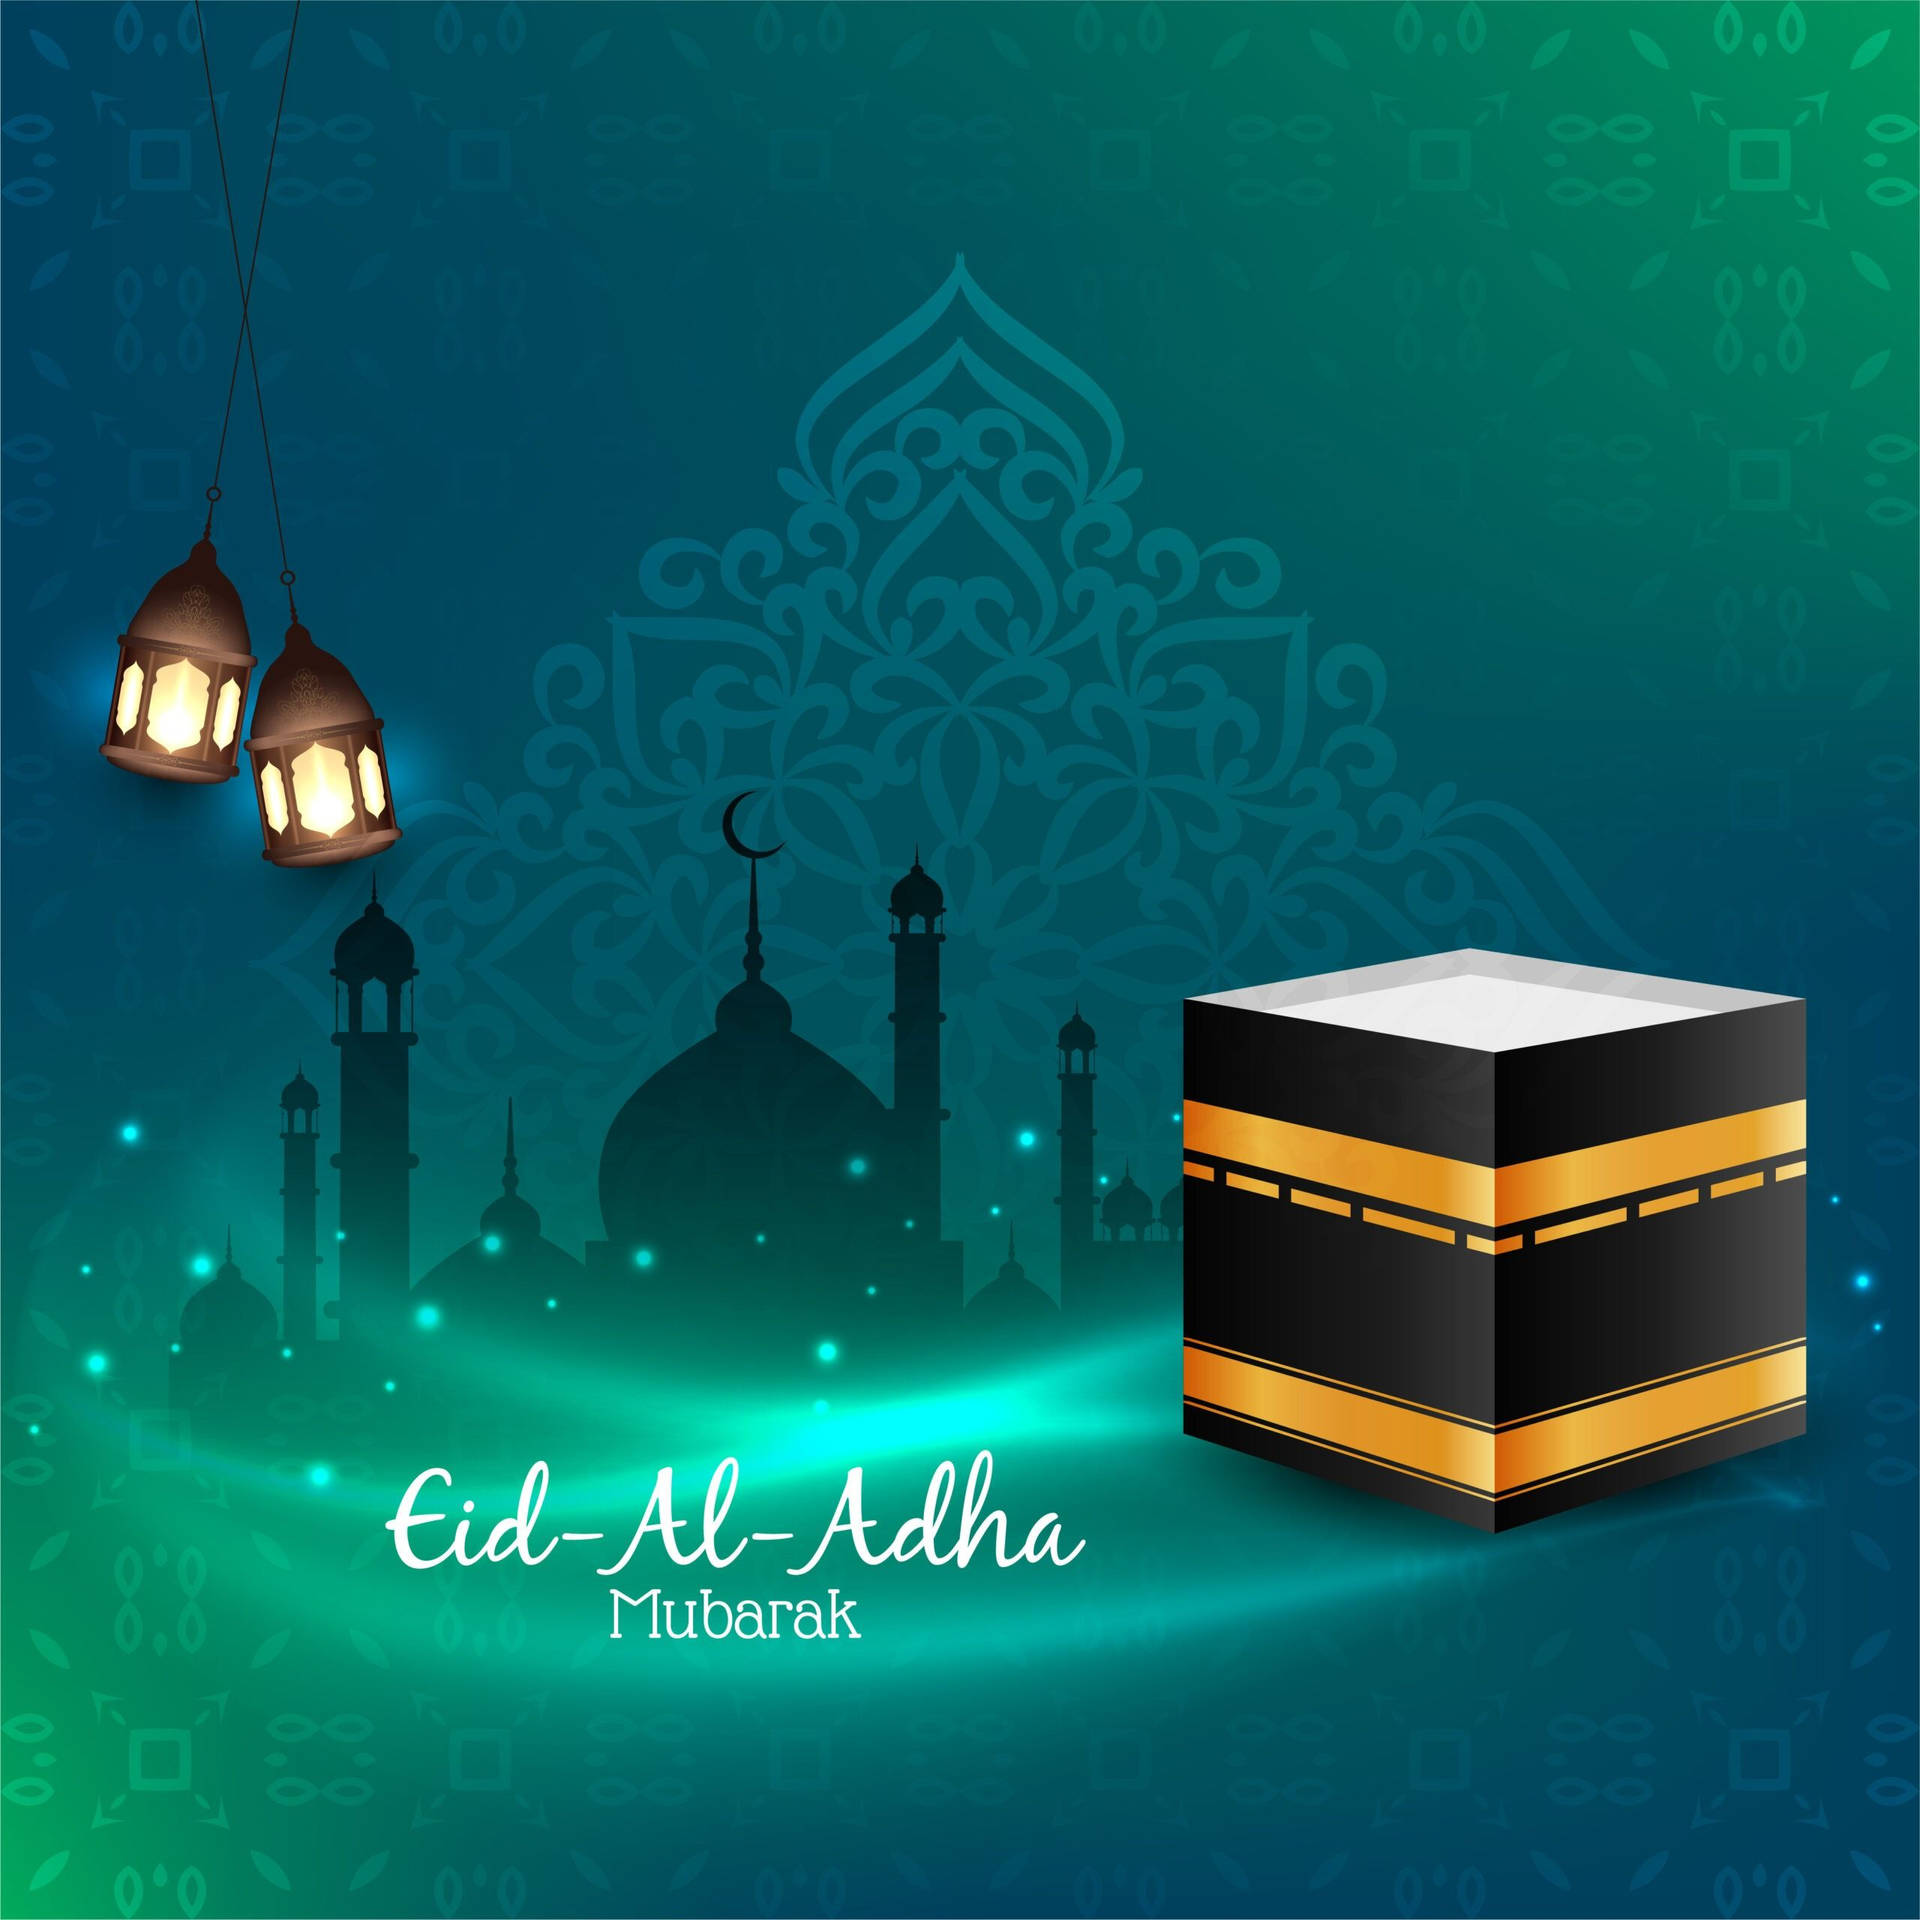 Eid-ul-adha Mubarak Mecca Cube Kaaba Picture